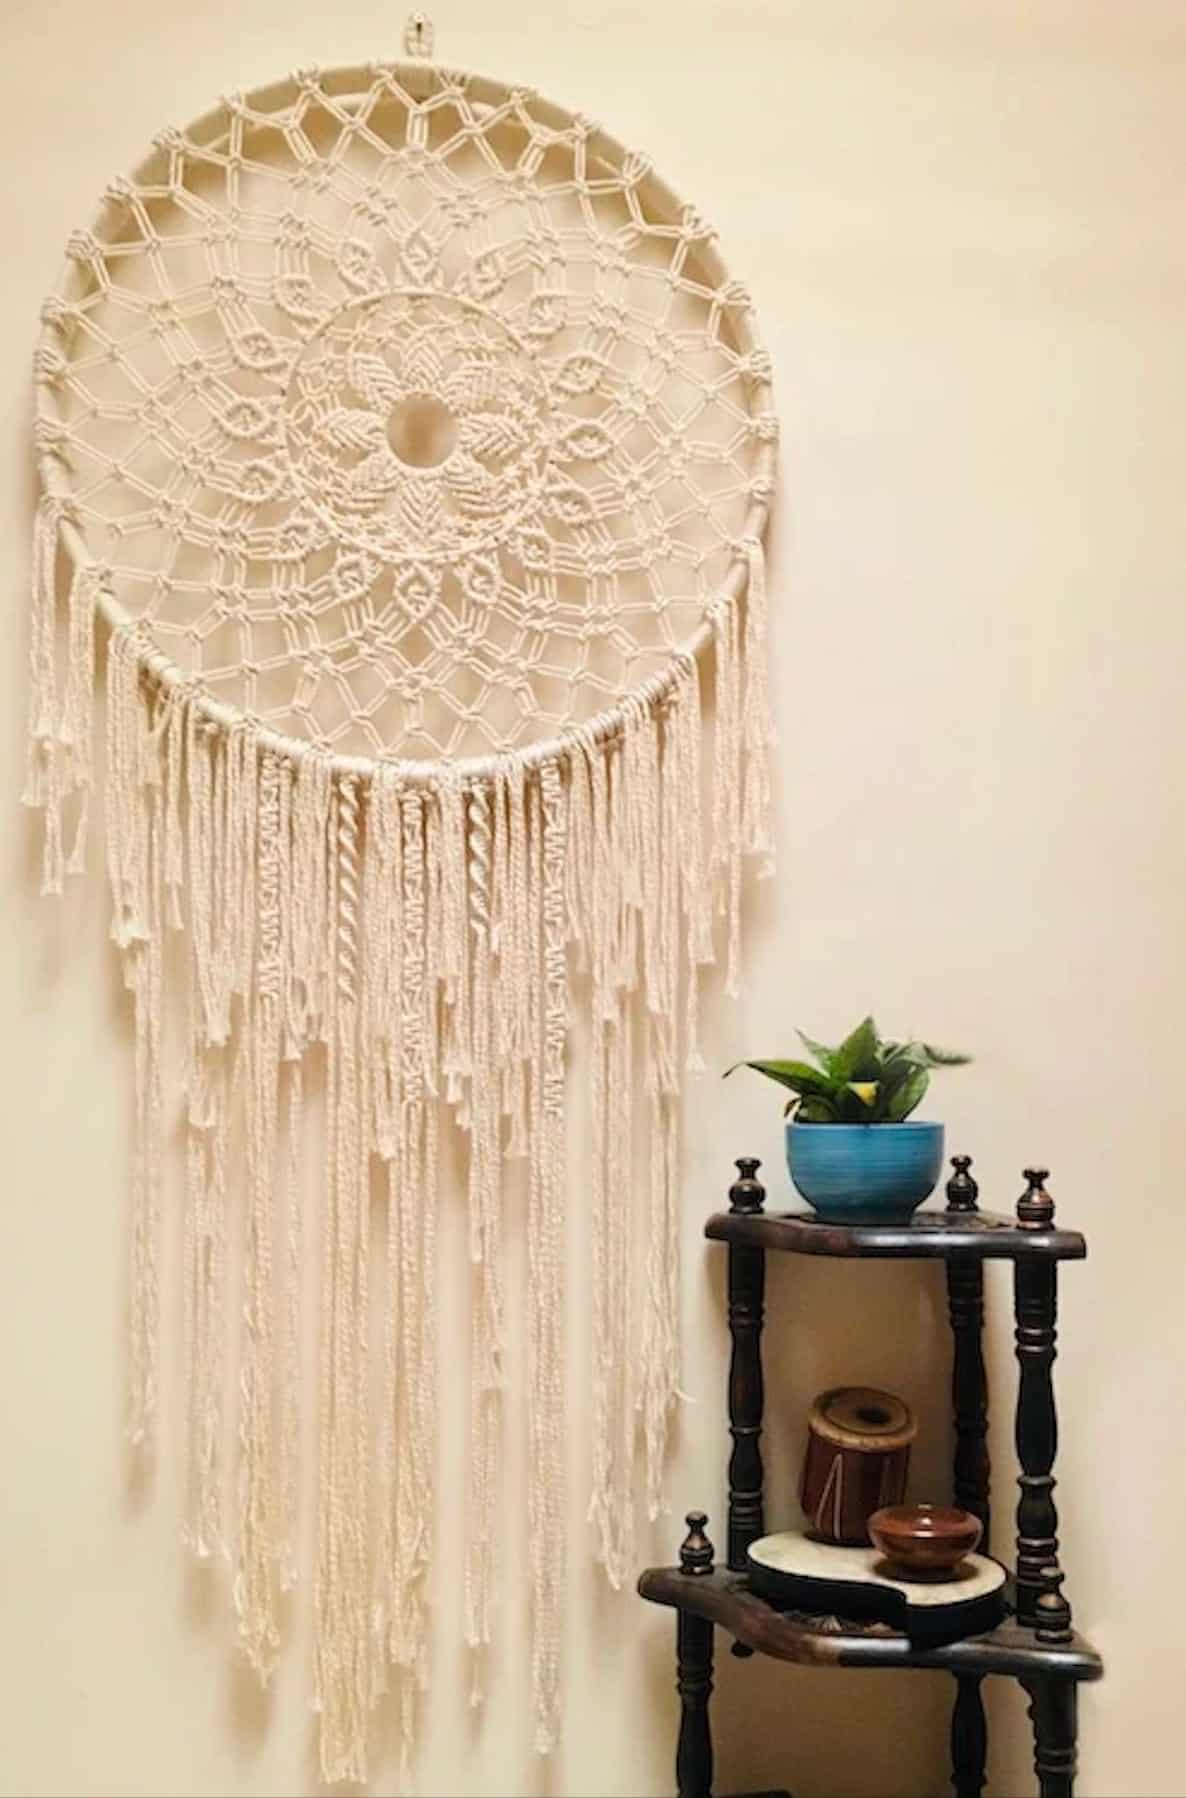 Mandala style wll hanging in off white macrame for living room decor